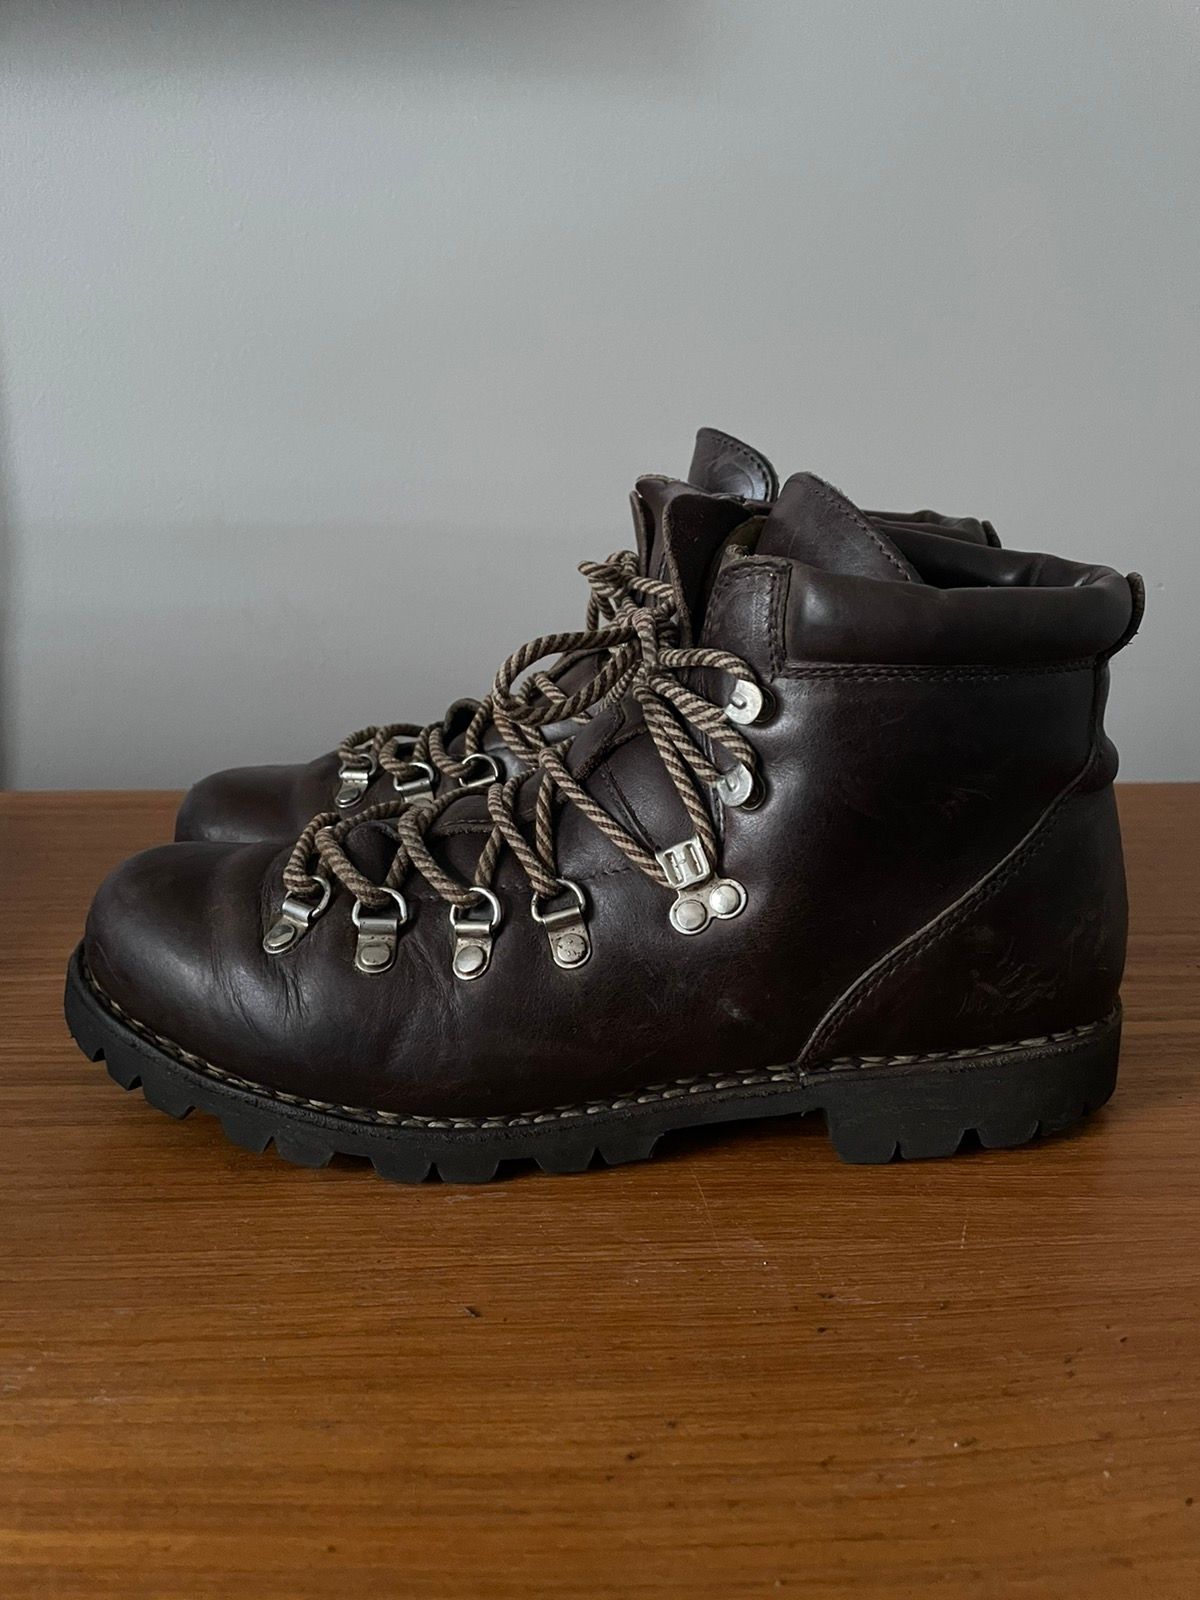 Paraboot Avioraz/Jannu Leather Hiking Boot Size US 8 / EU 41 - 4 Thumbnail